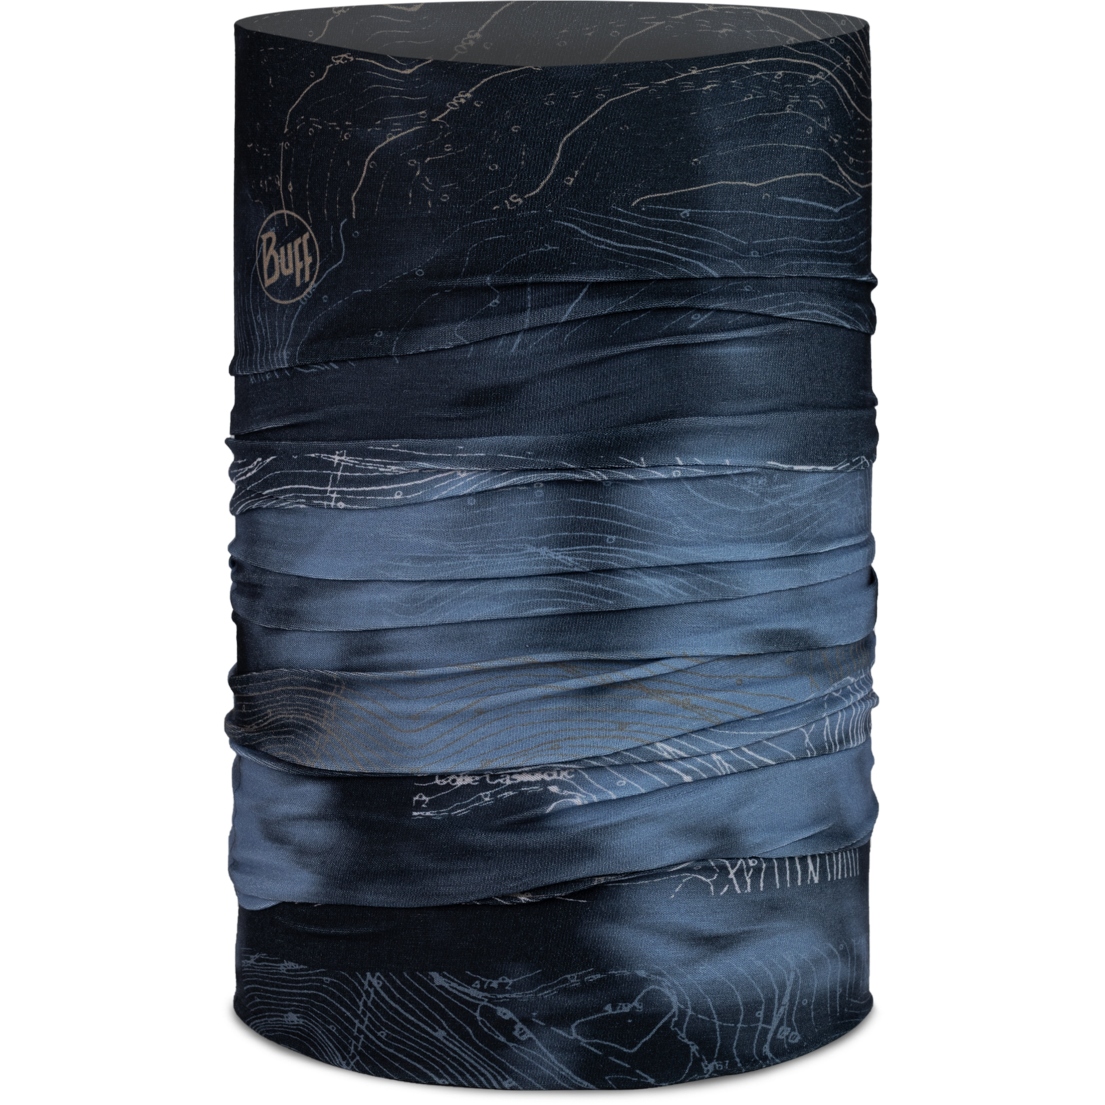 Productfoto van Buff® Original EcoStretch Multifunctionele Doek - Neshi Night Blue